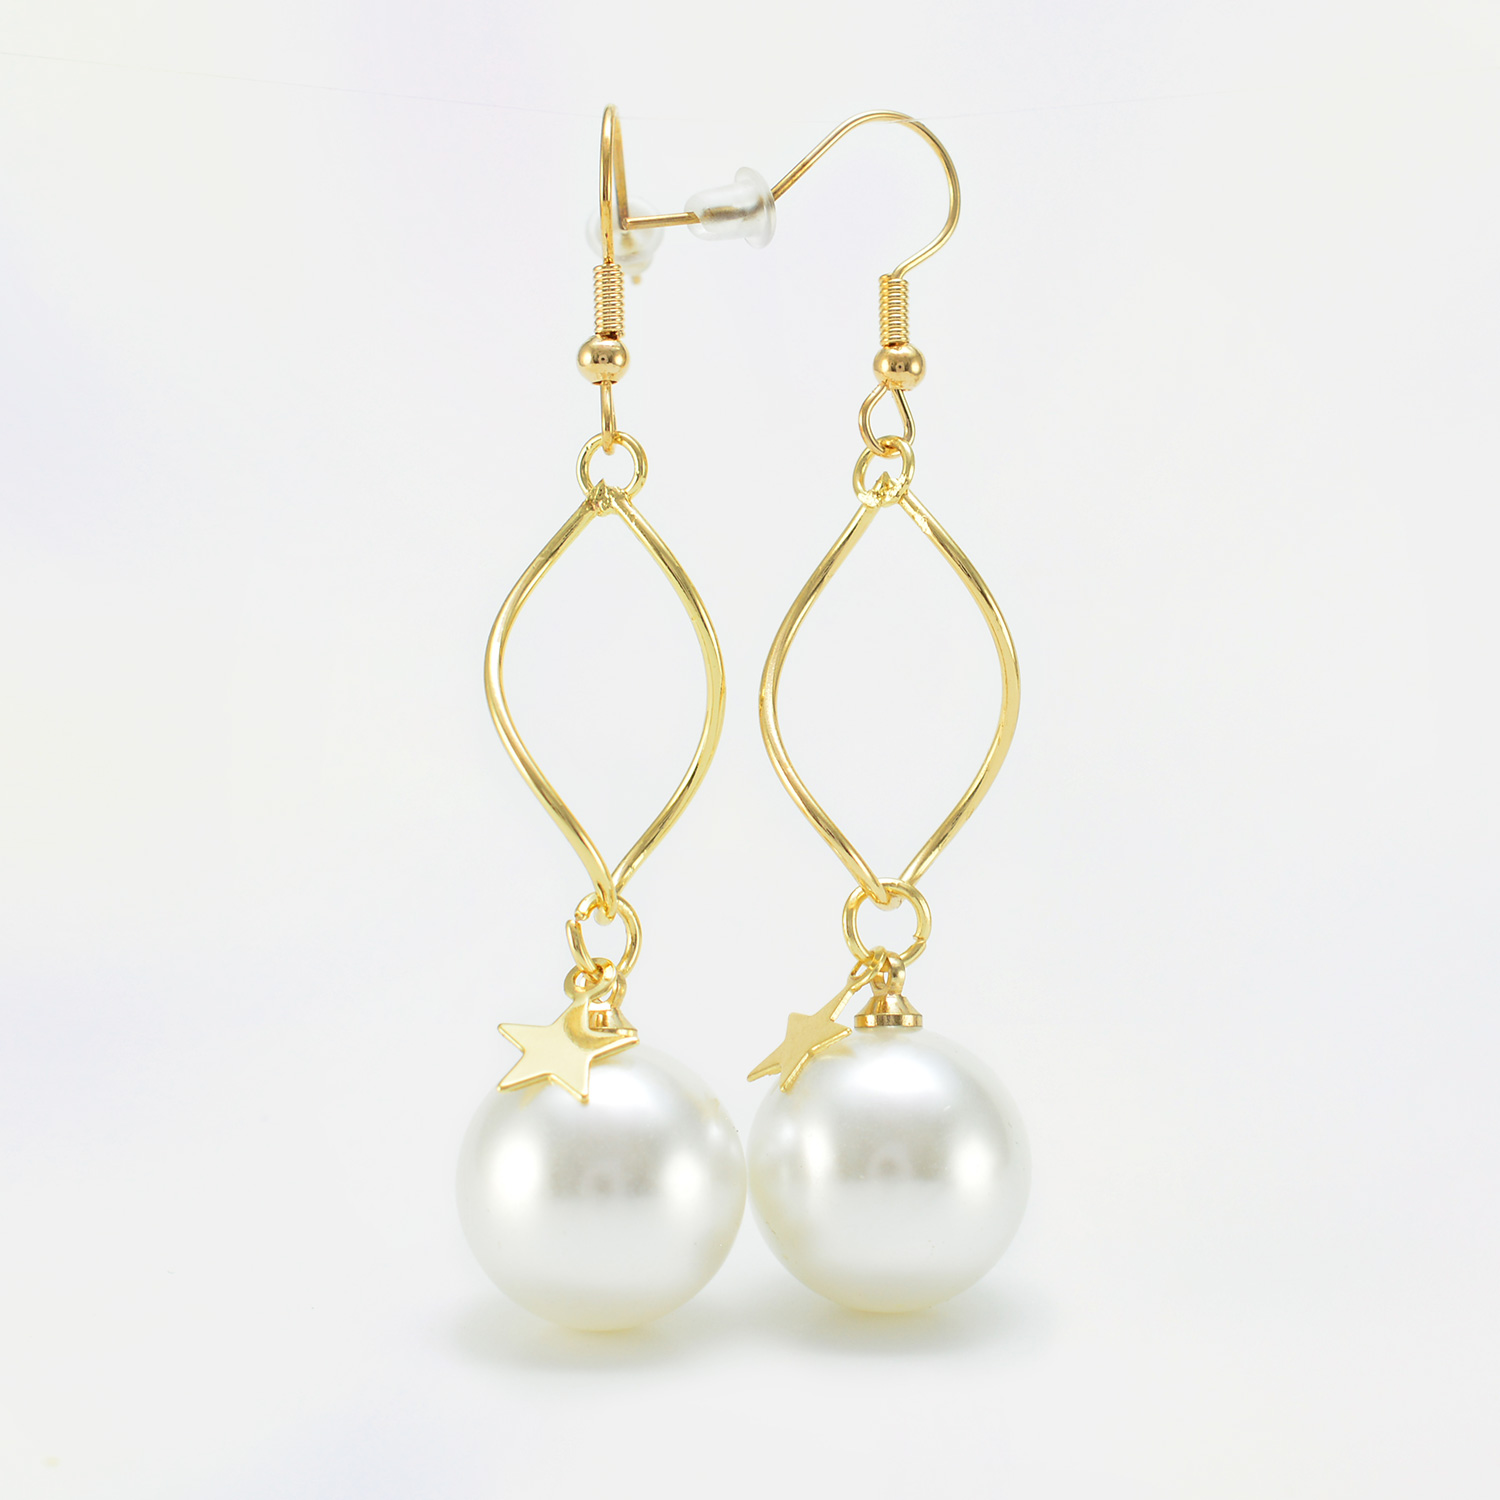 Star Designer Golden Color Earrings set with Big Pearls